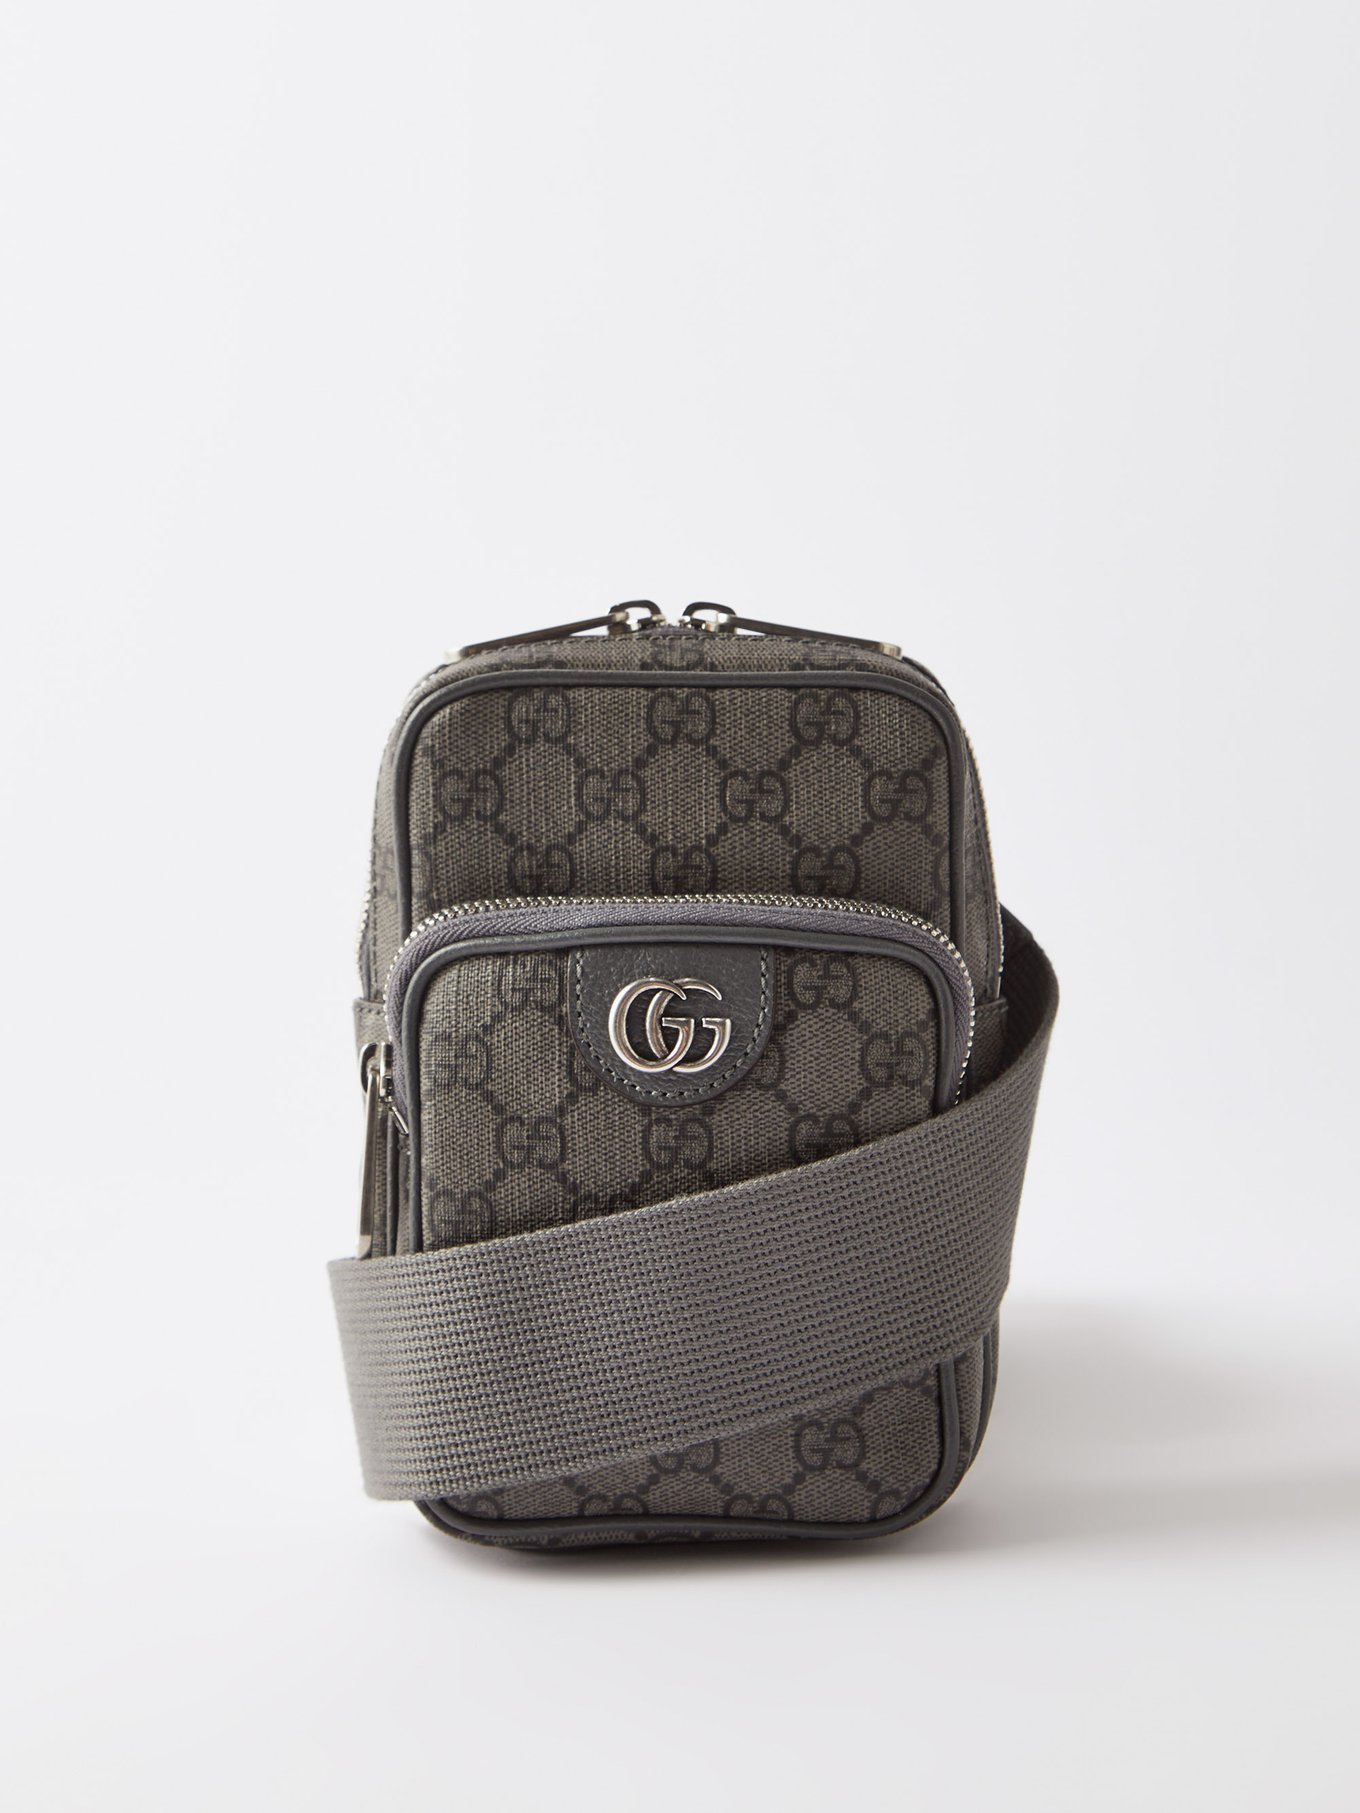 Gucci Messenger GG Supreme Black/Grey